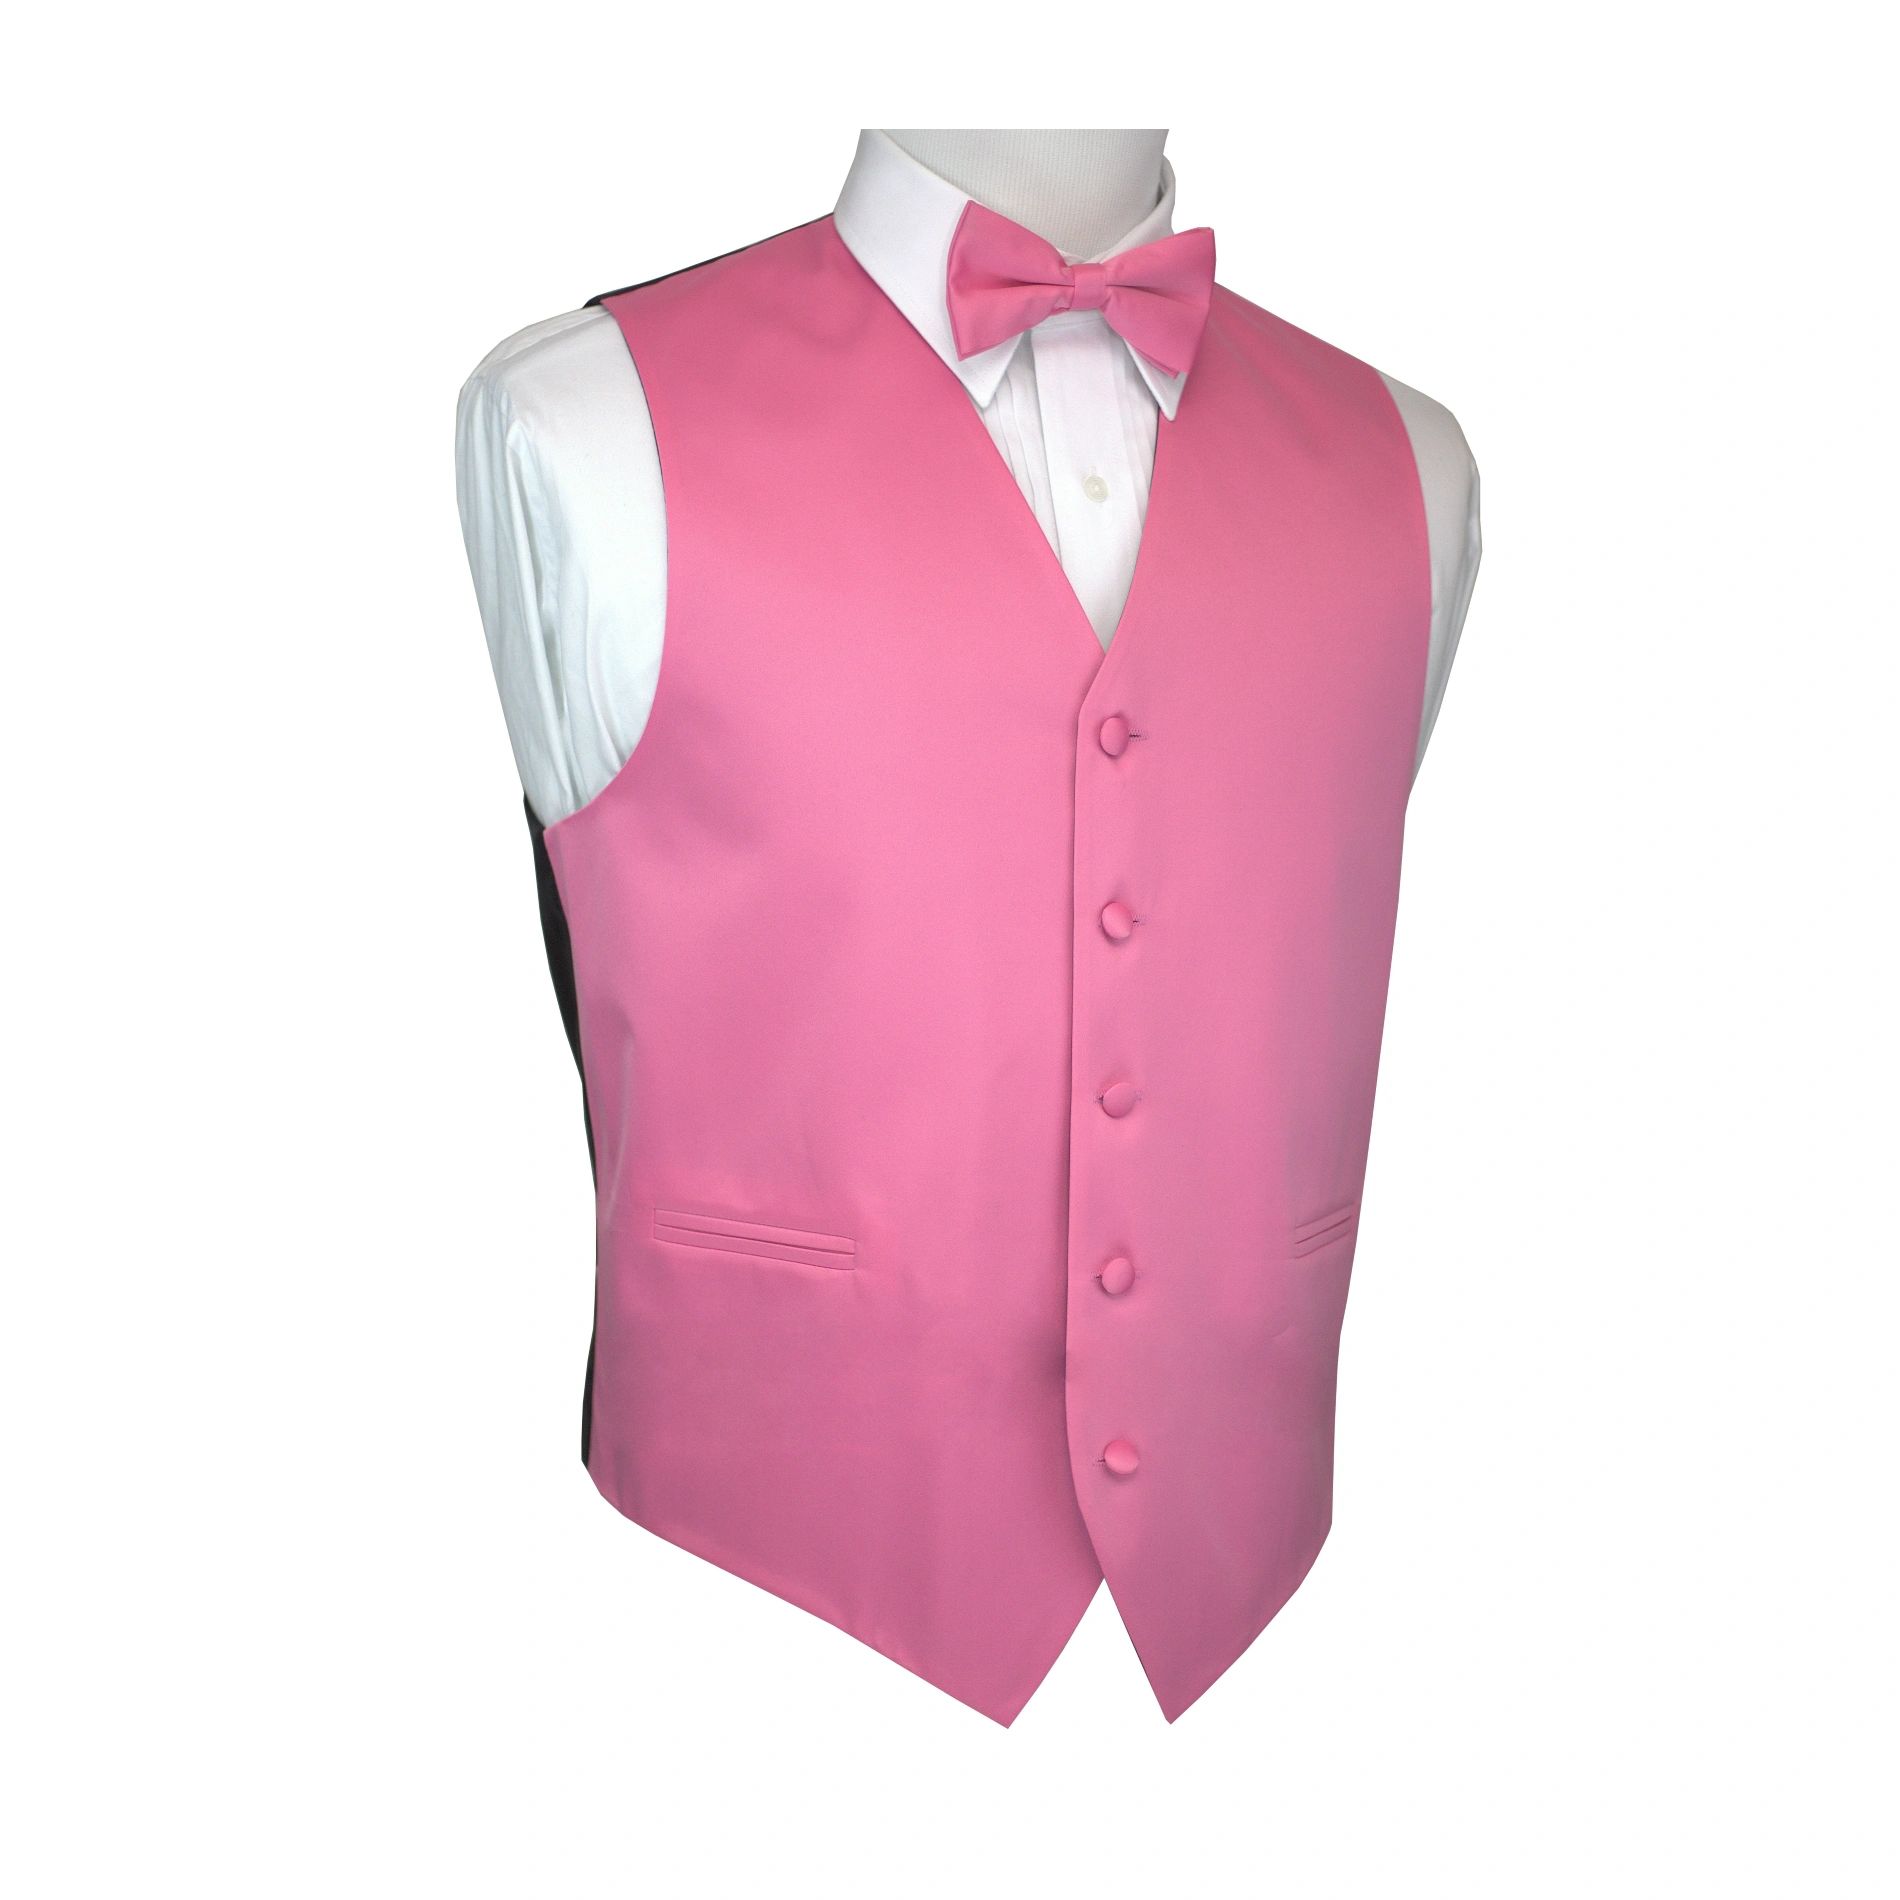 Brand Q Italian Design, Men's Formal Tuxedo Vest, Bow-tie - Hot Pink